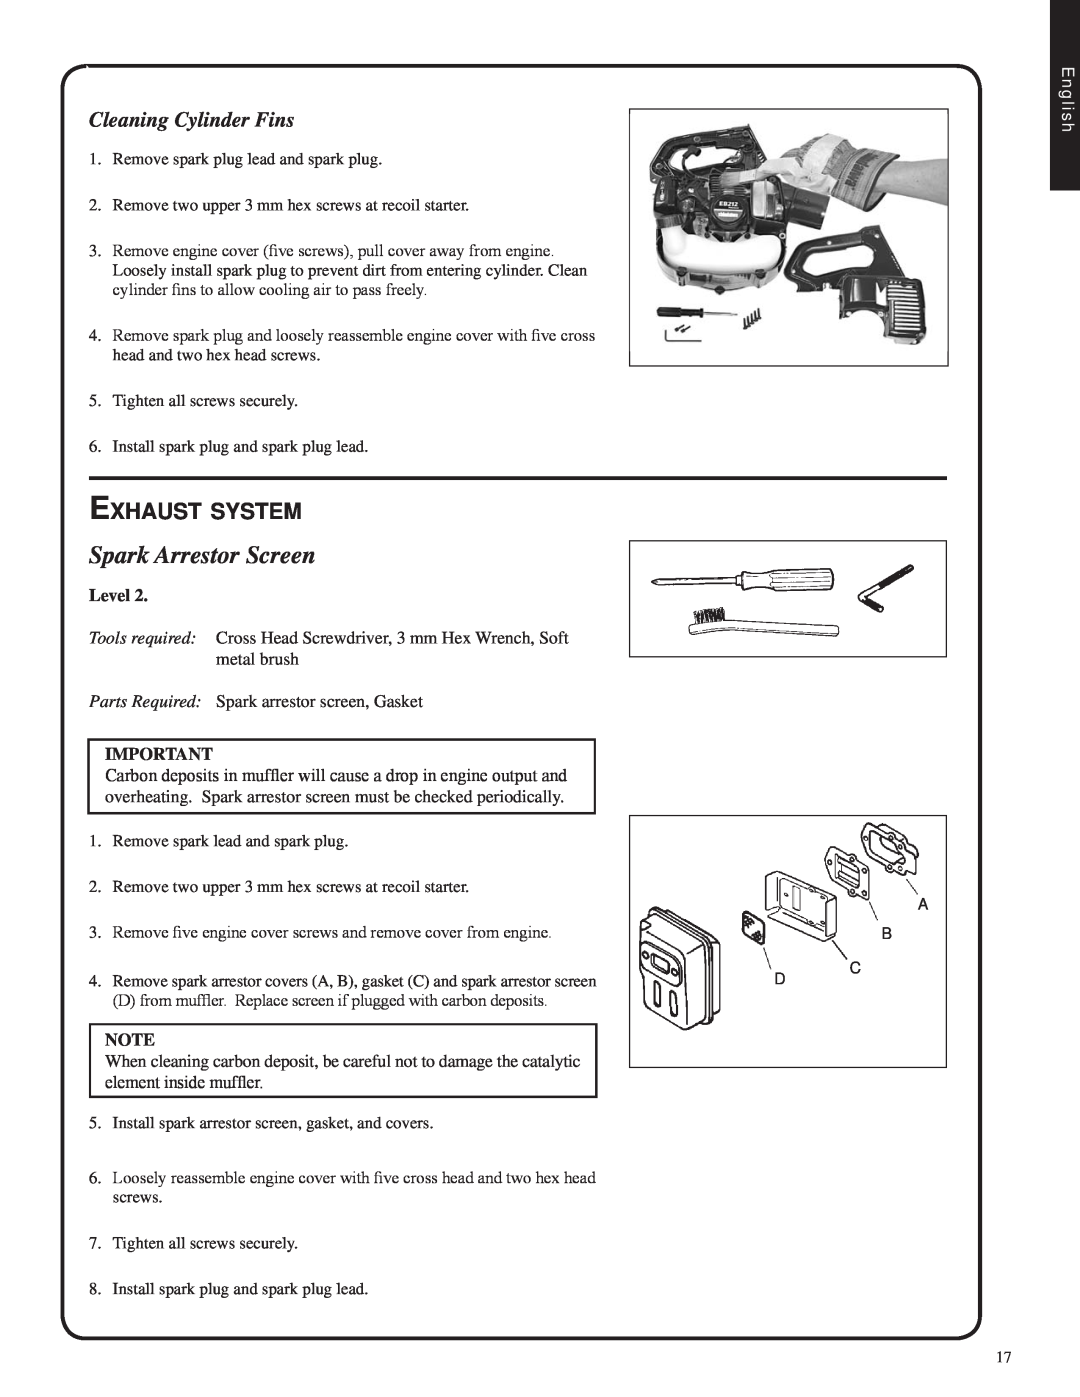 Shindaiwa 82051, EB212 manual Spark Arrestor Screen, Exhaust system, Cleaning Cylinder Fins, English 